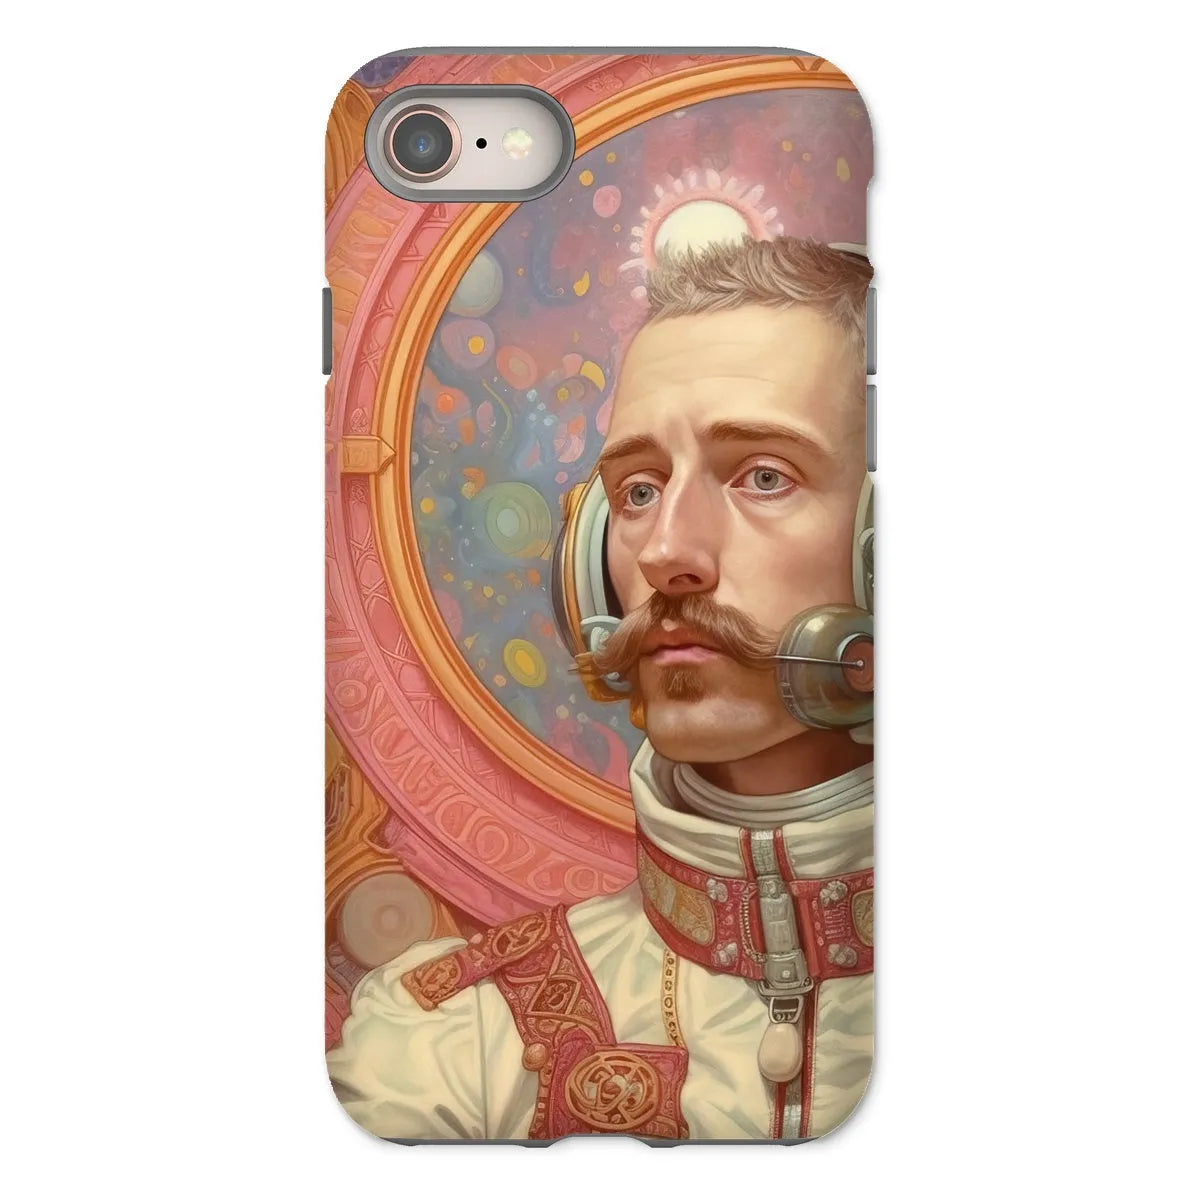 Axel The Gay Astronaut - Gay Aesthetic Art Phone Case - Iphone 8 / Matte - Mobile Phone Cases - Aesthetic Art